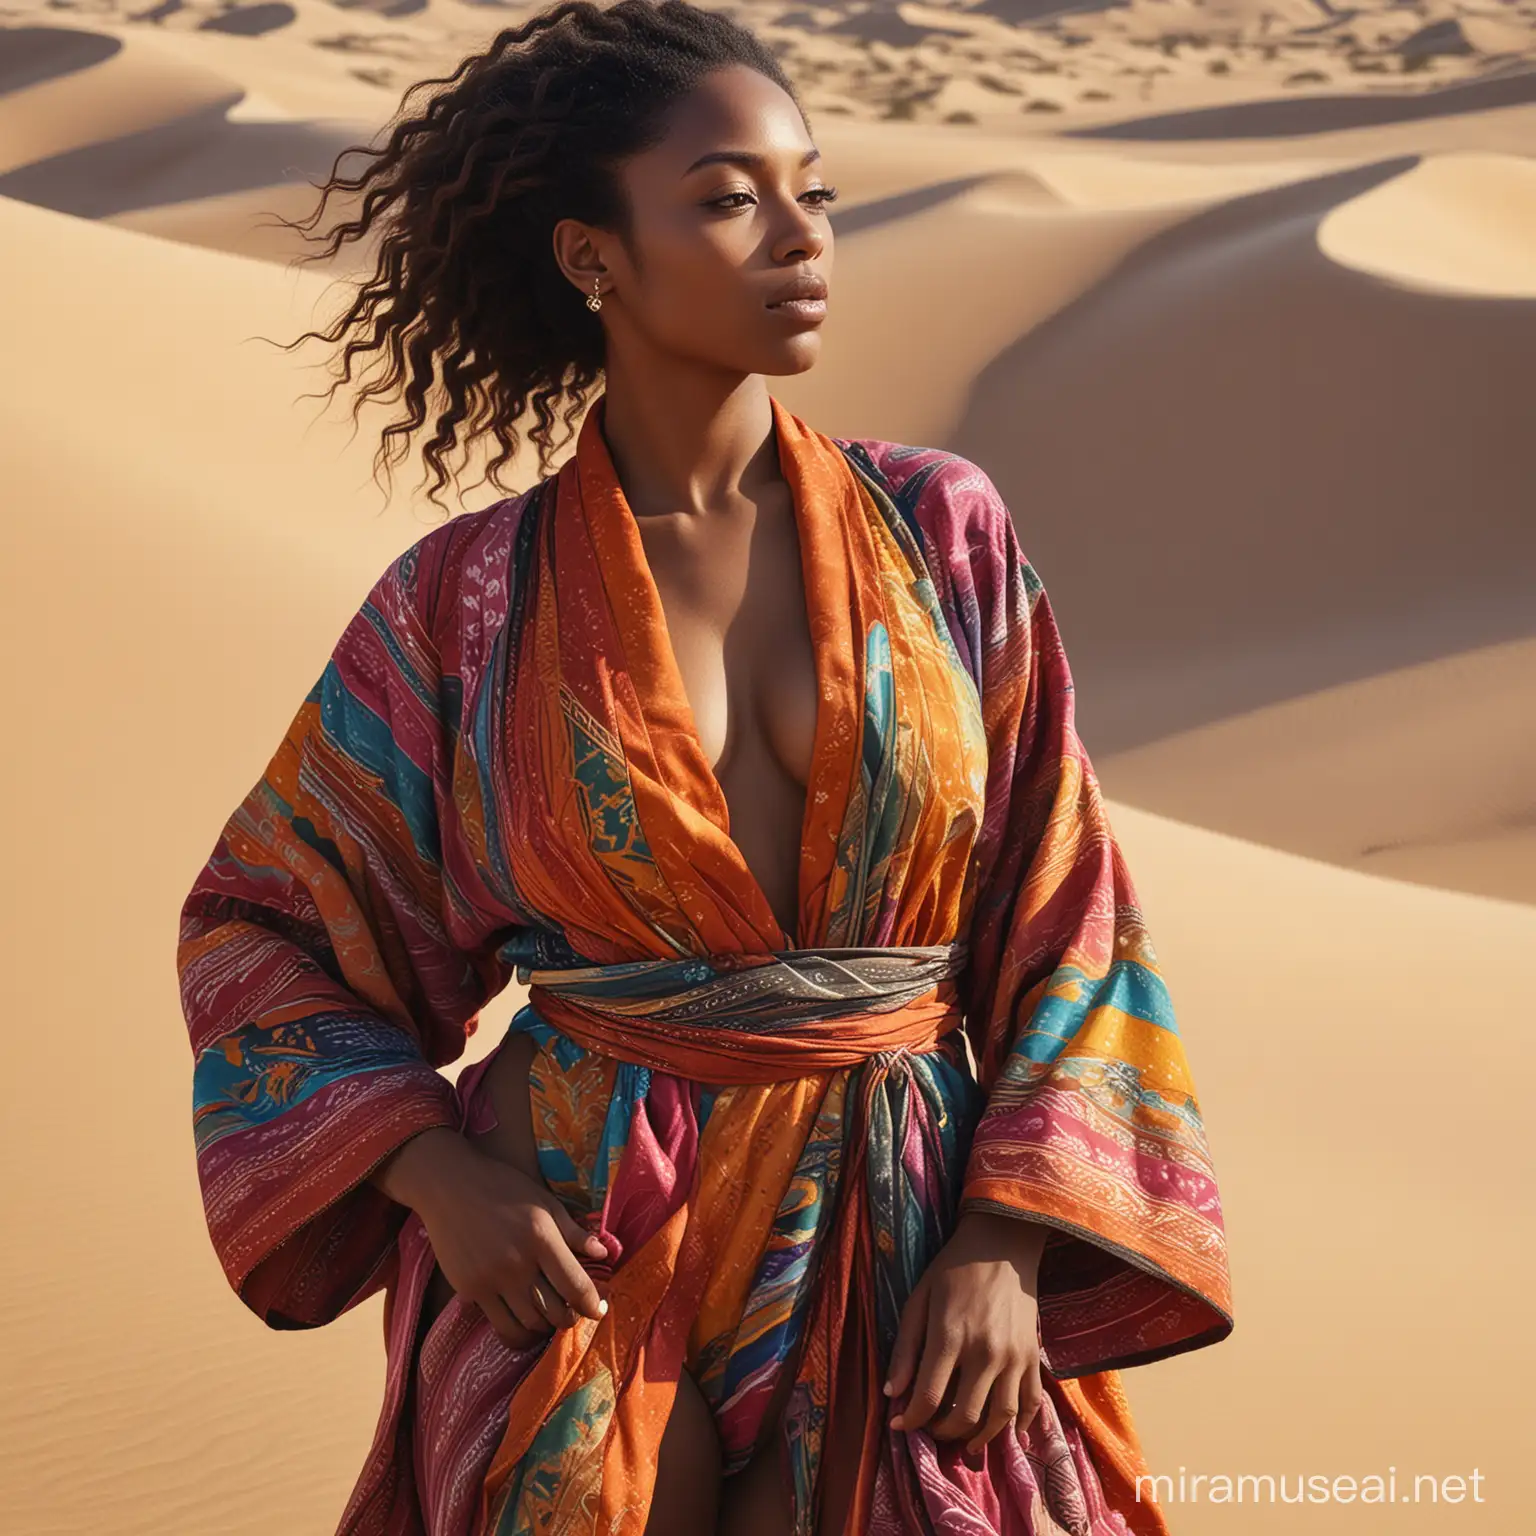 Vibrant Robed Figure in Desert Landscape Black Womans Graceful Pose